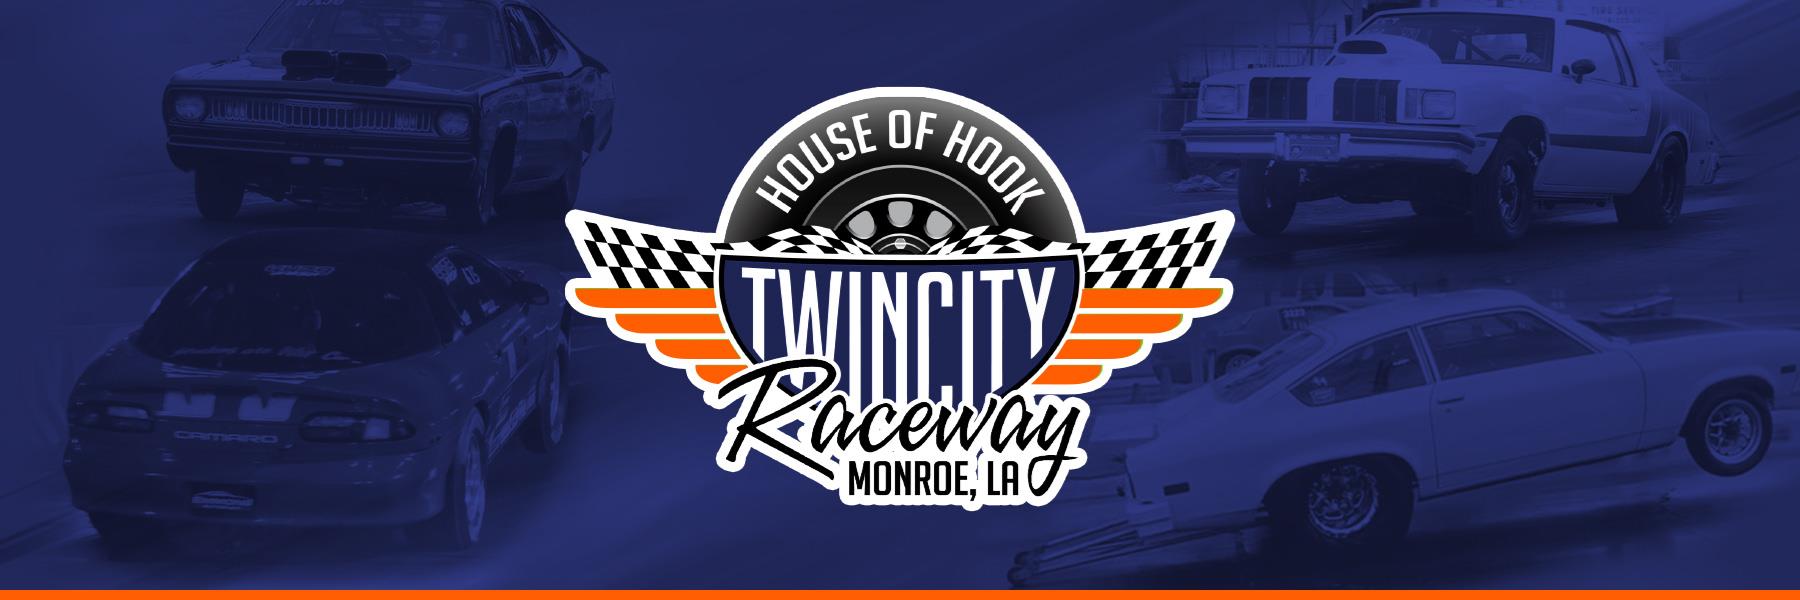 Twin City Raceway